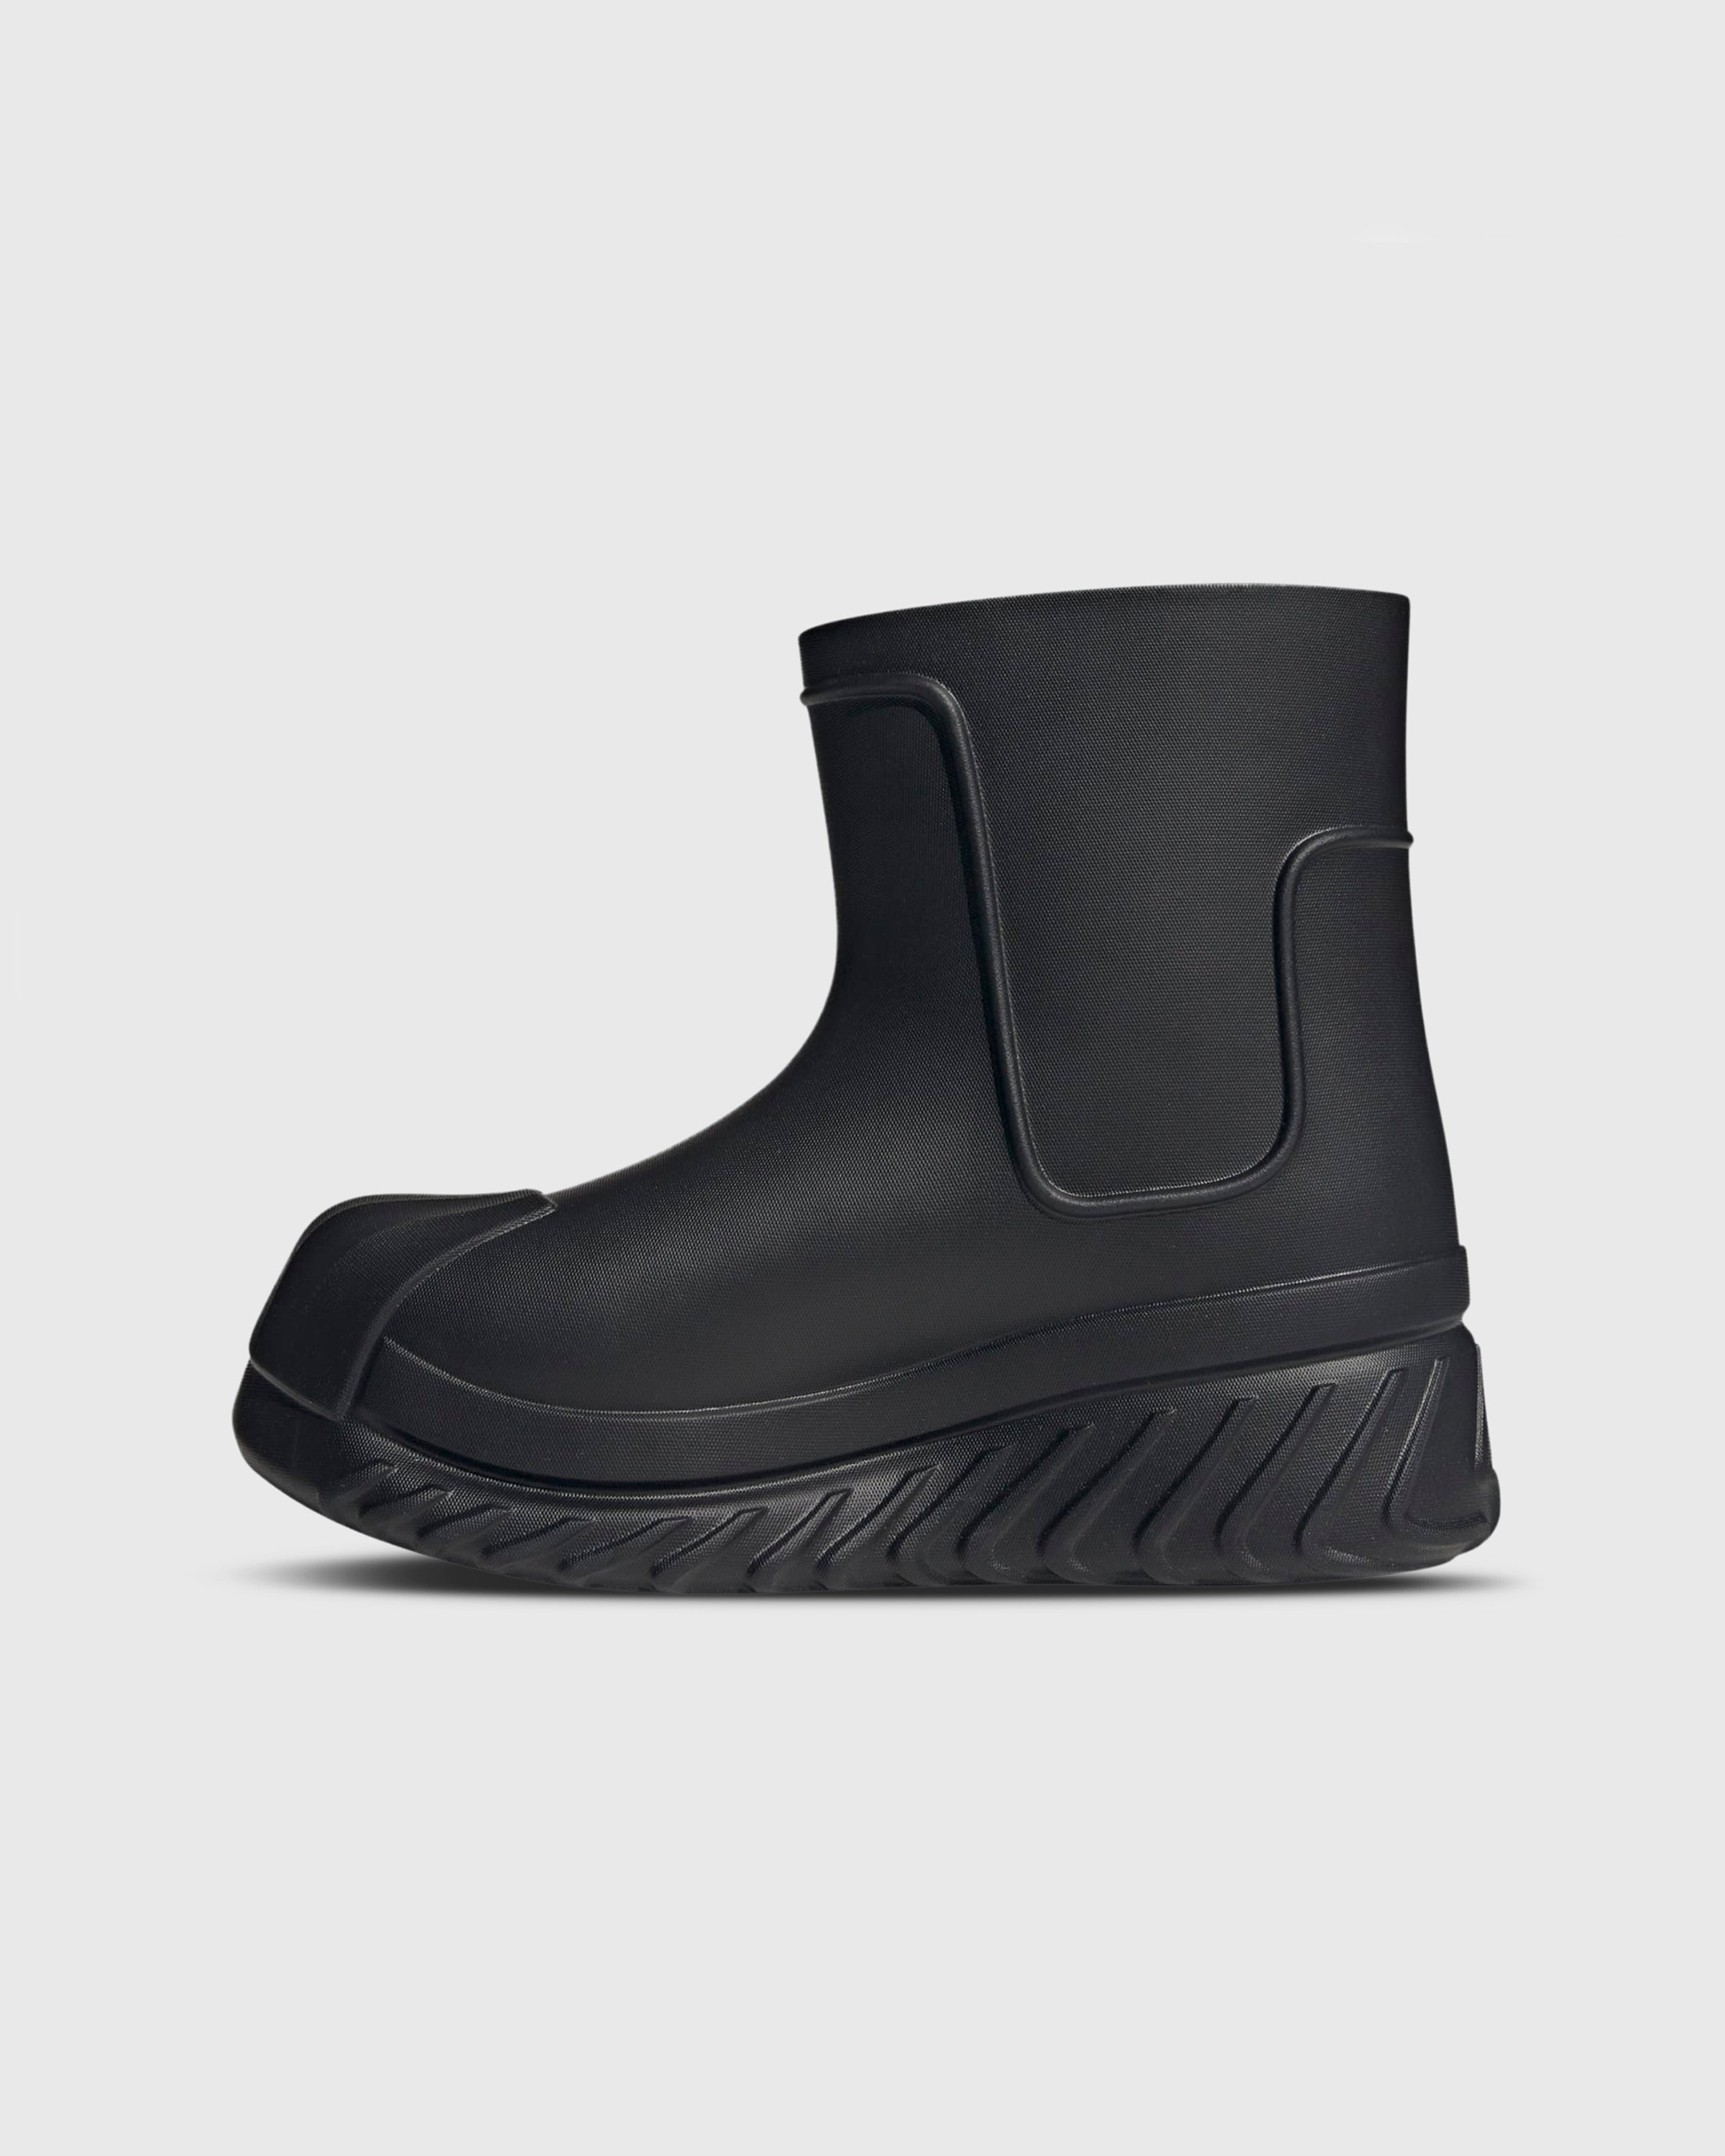 Adidas - ADIFOM SUPERSTAR BO CBLACK/CBLACK/GRESIX - Footwear - Black - Image 2